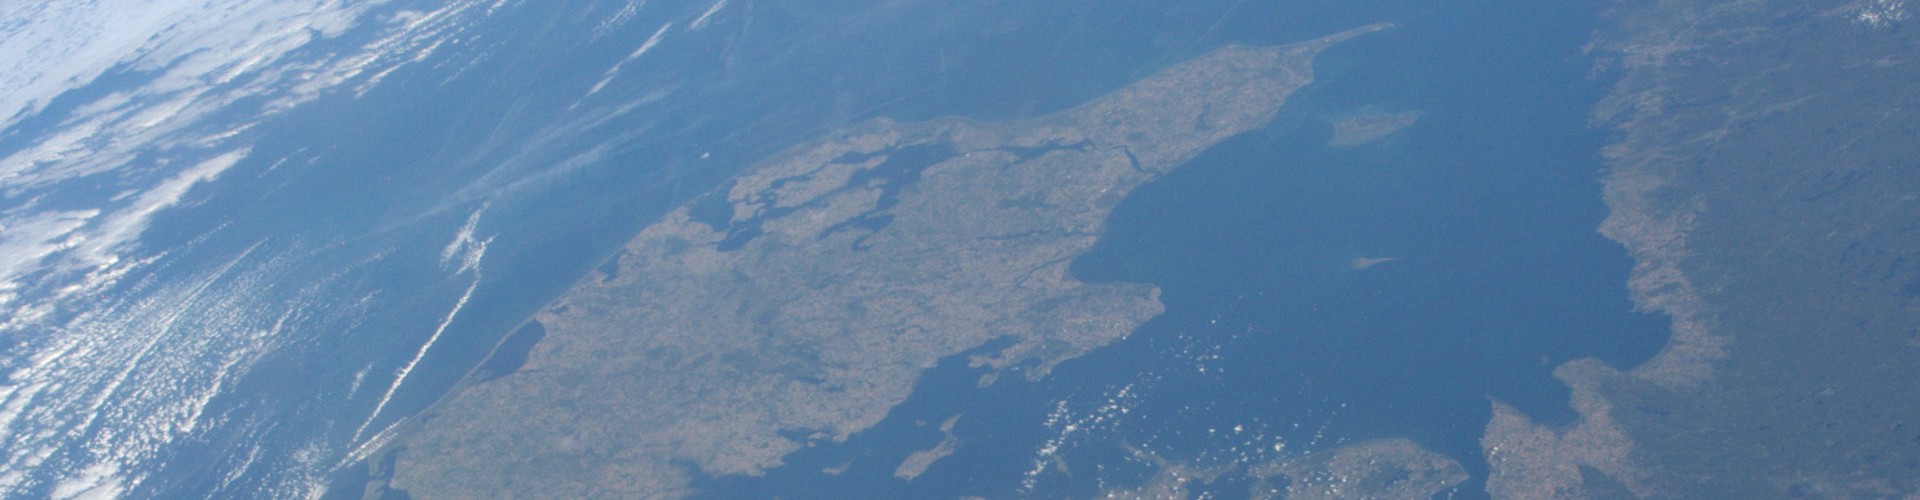 Danmark set fra Den Internationale Rumstation, ISS. (Foto: A. Mogensen/ESA)